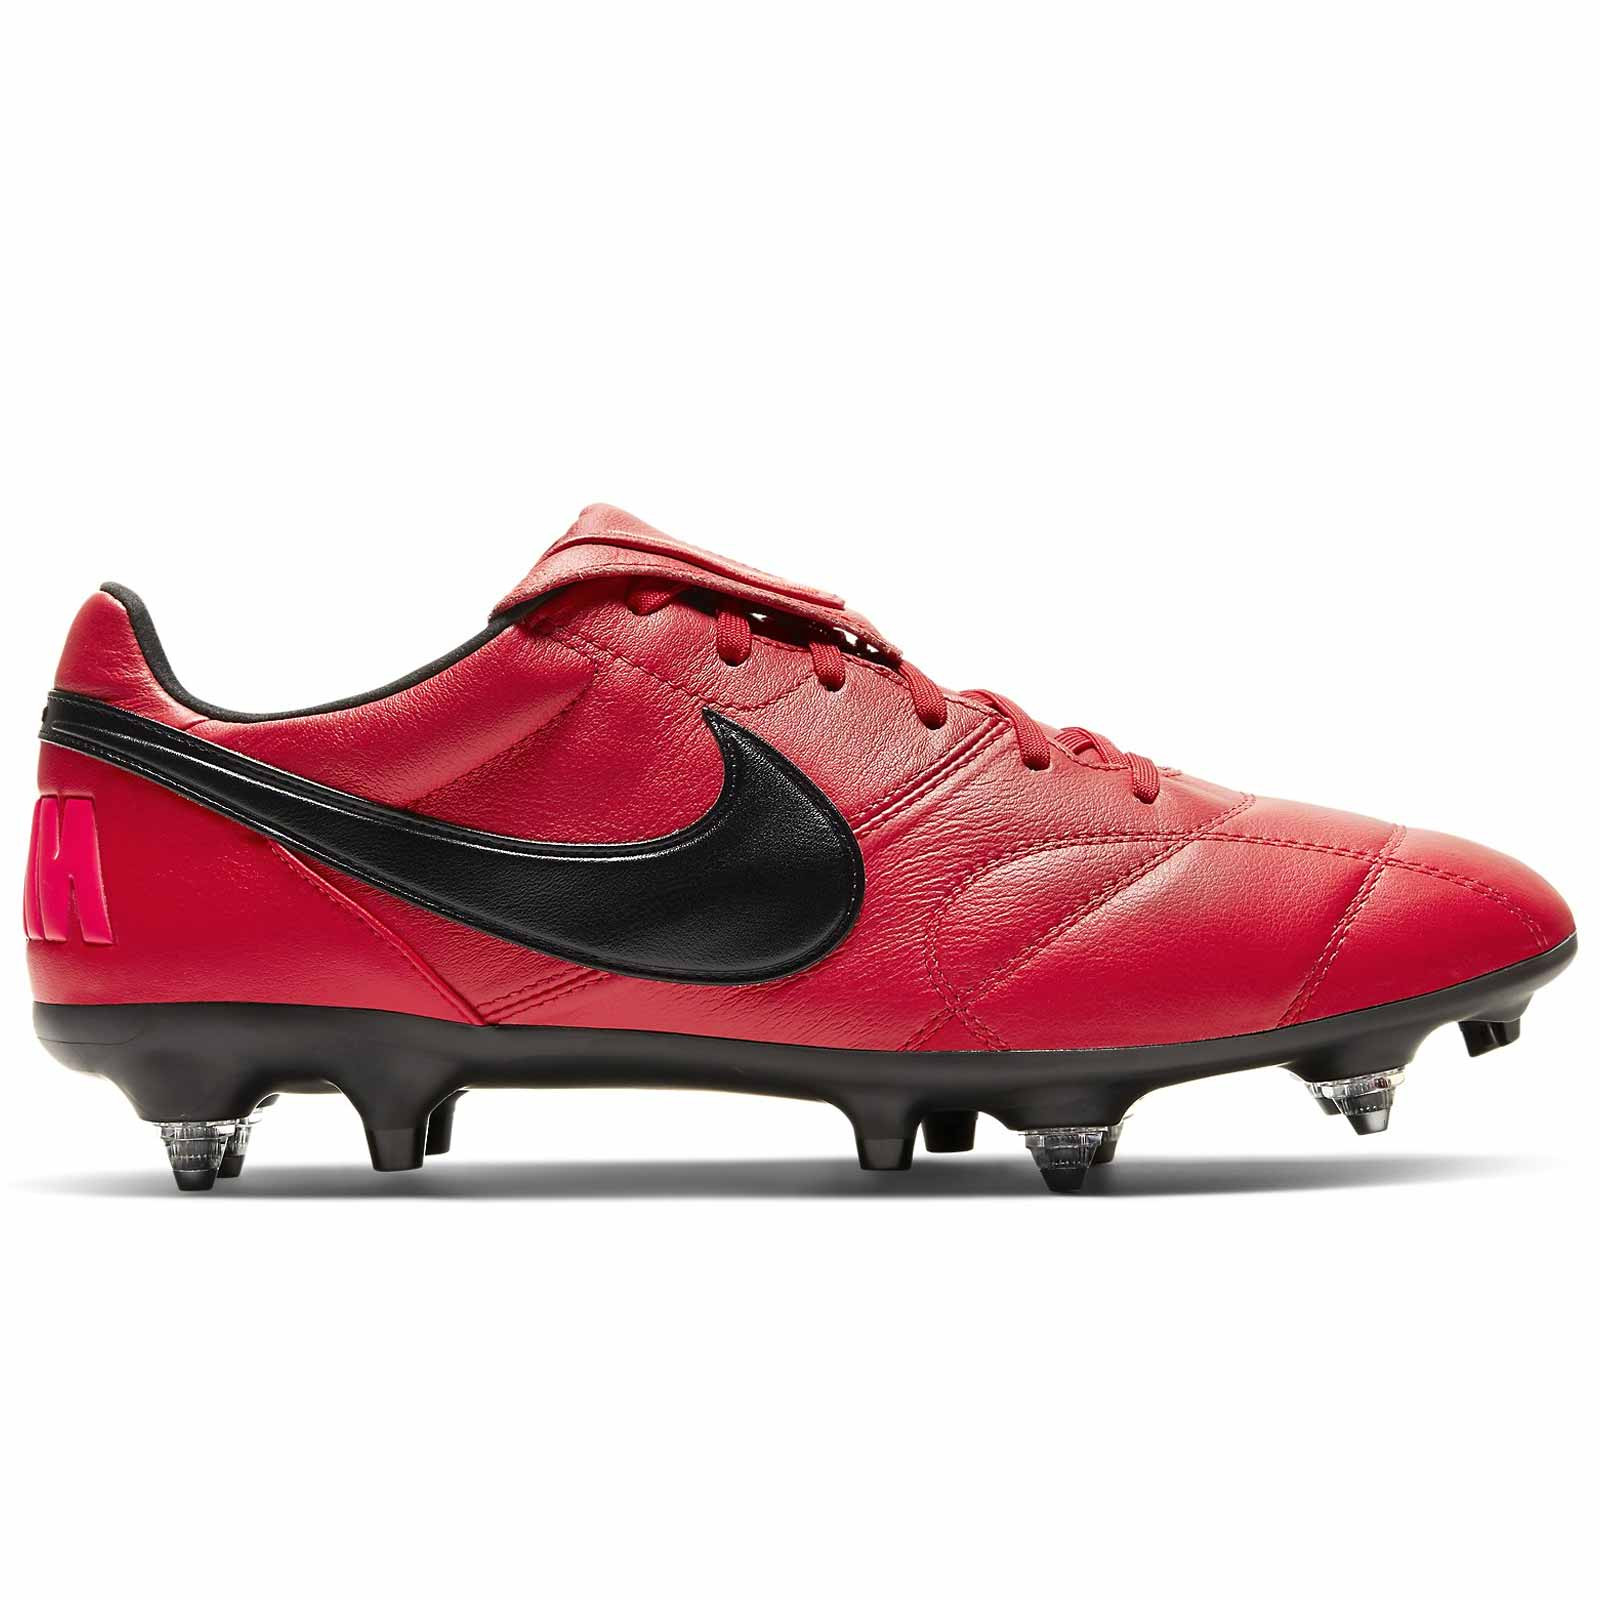 Botas Nike Premier II SG-PRO AC rojas negras